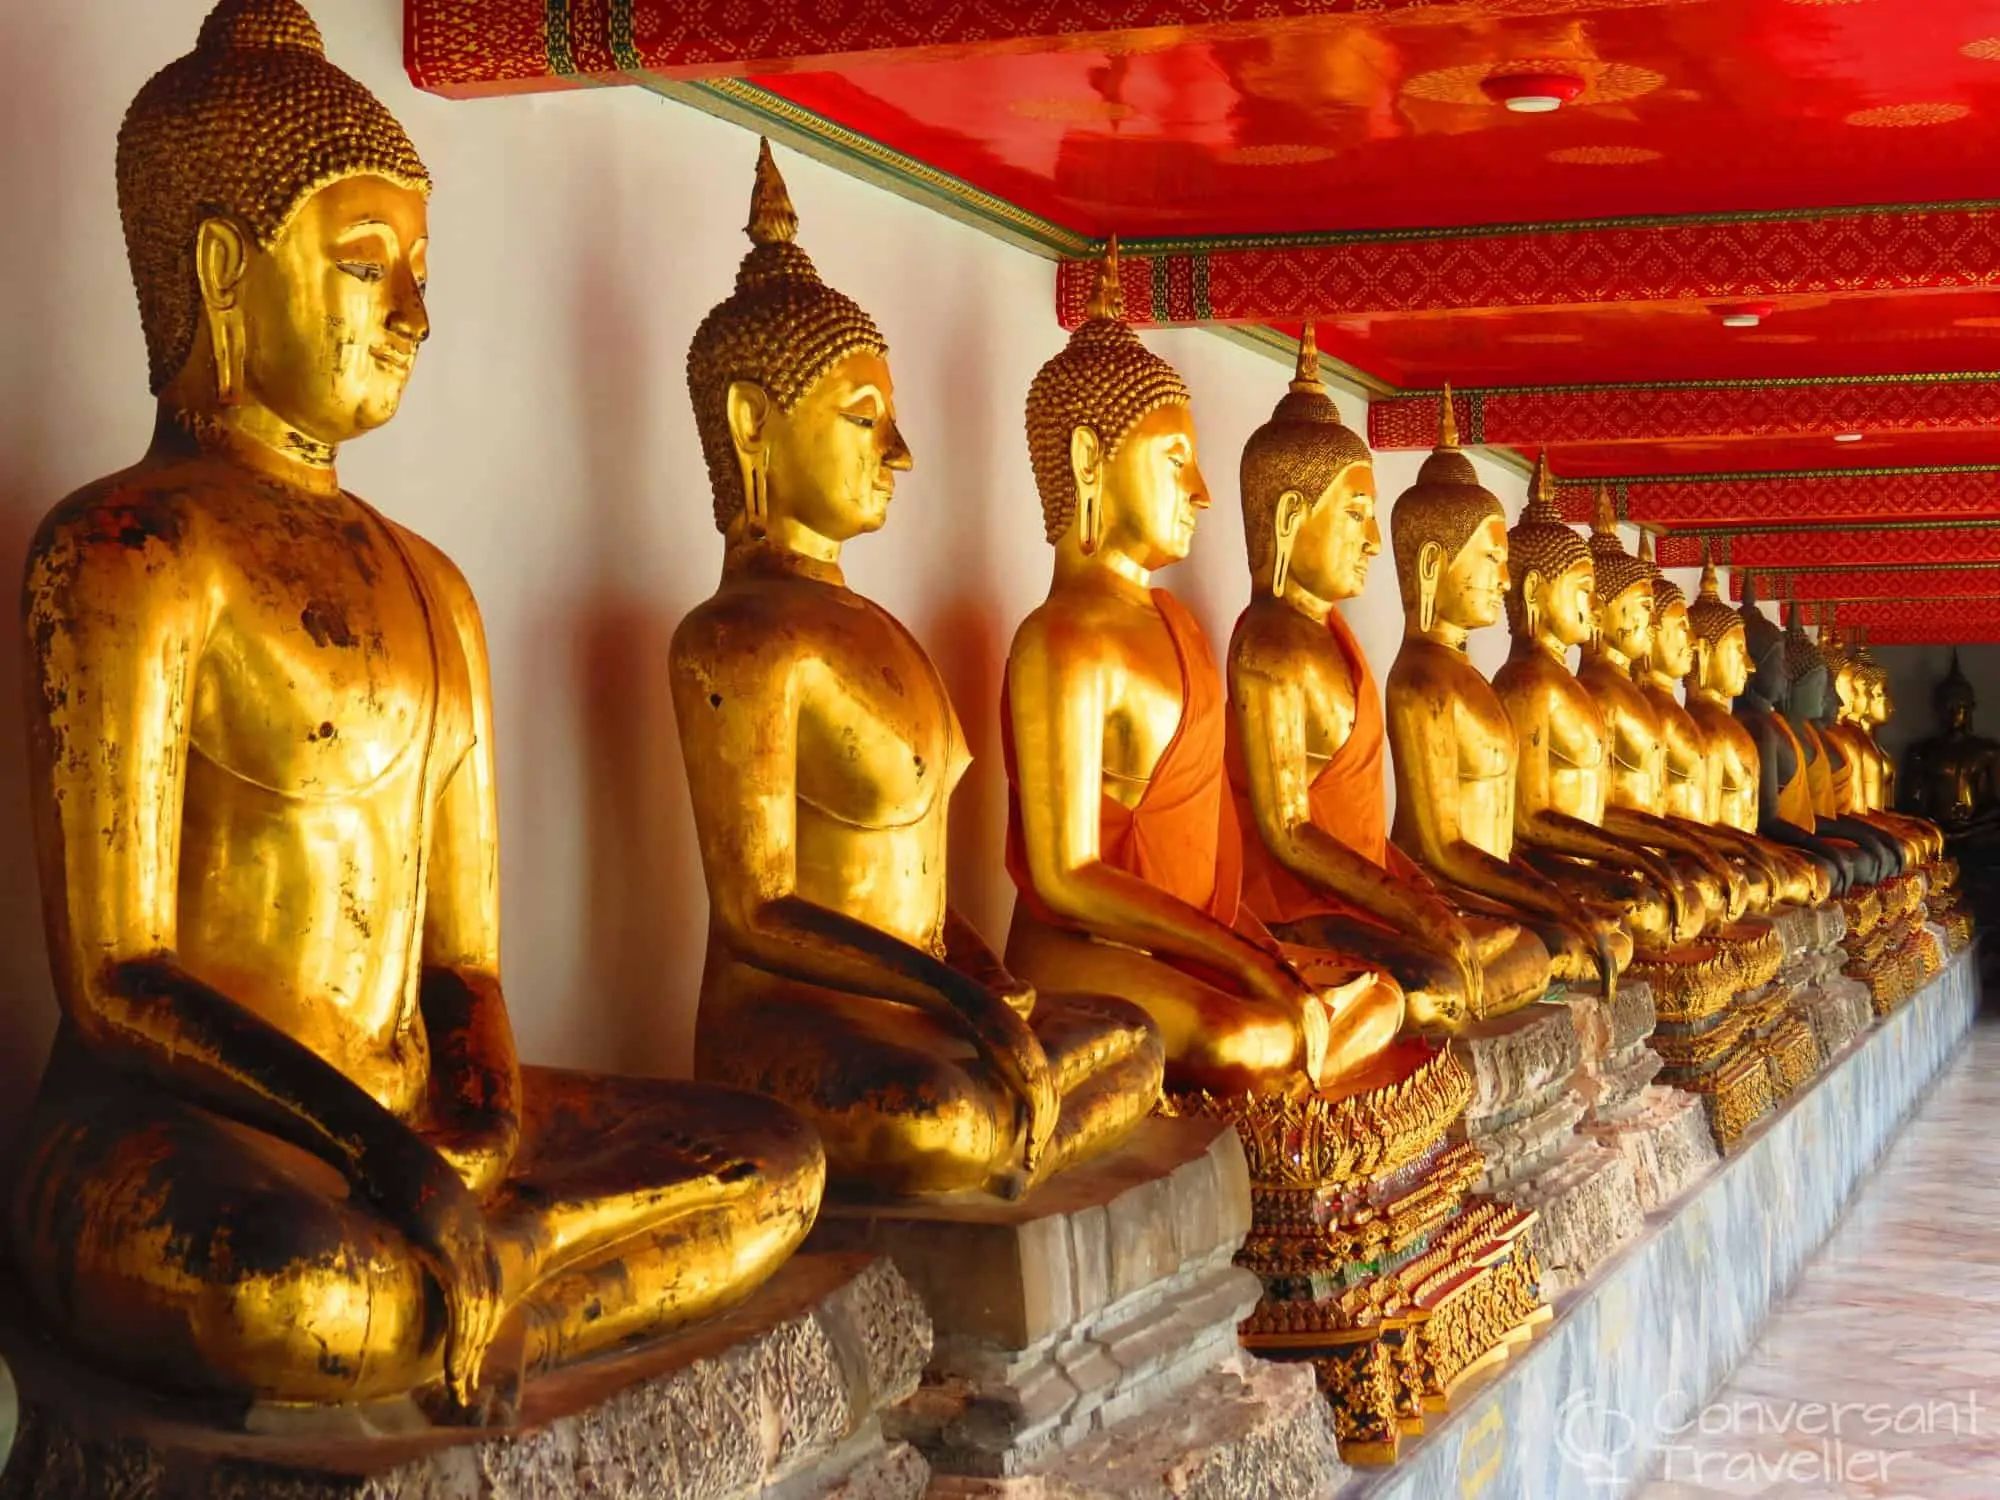 The famous line of regal buddhas at Wat Pho, Bangkok